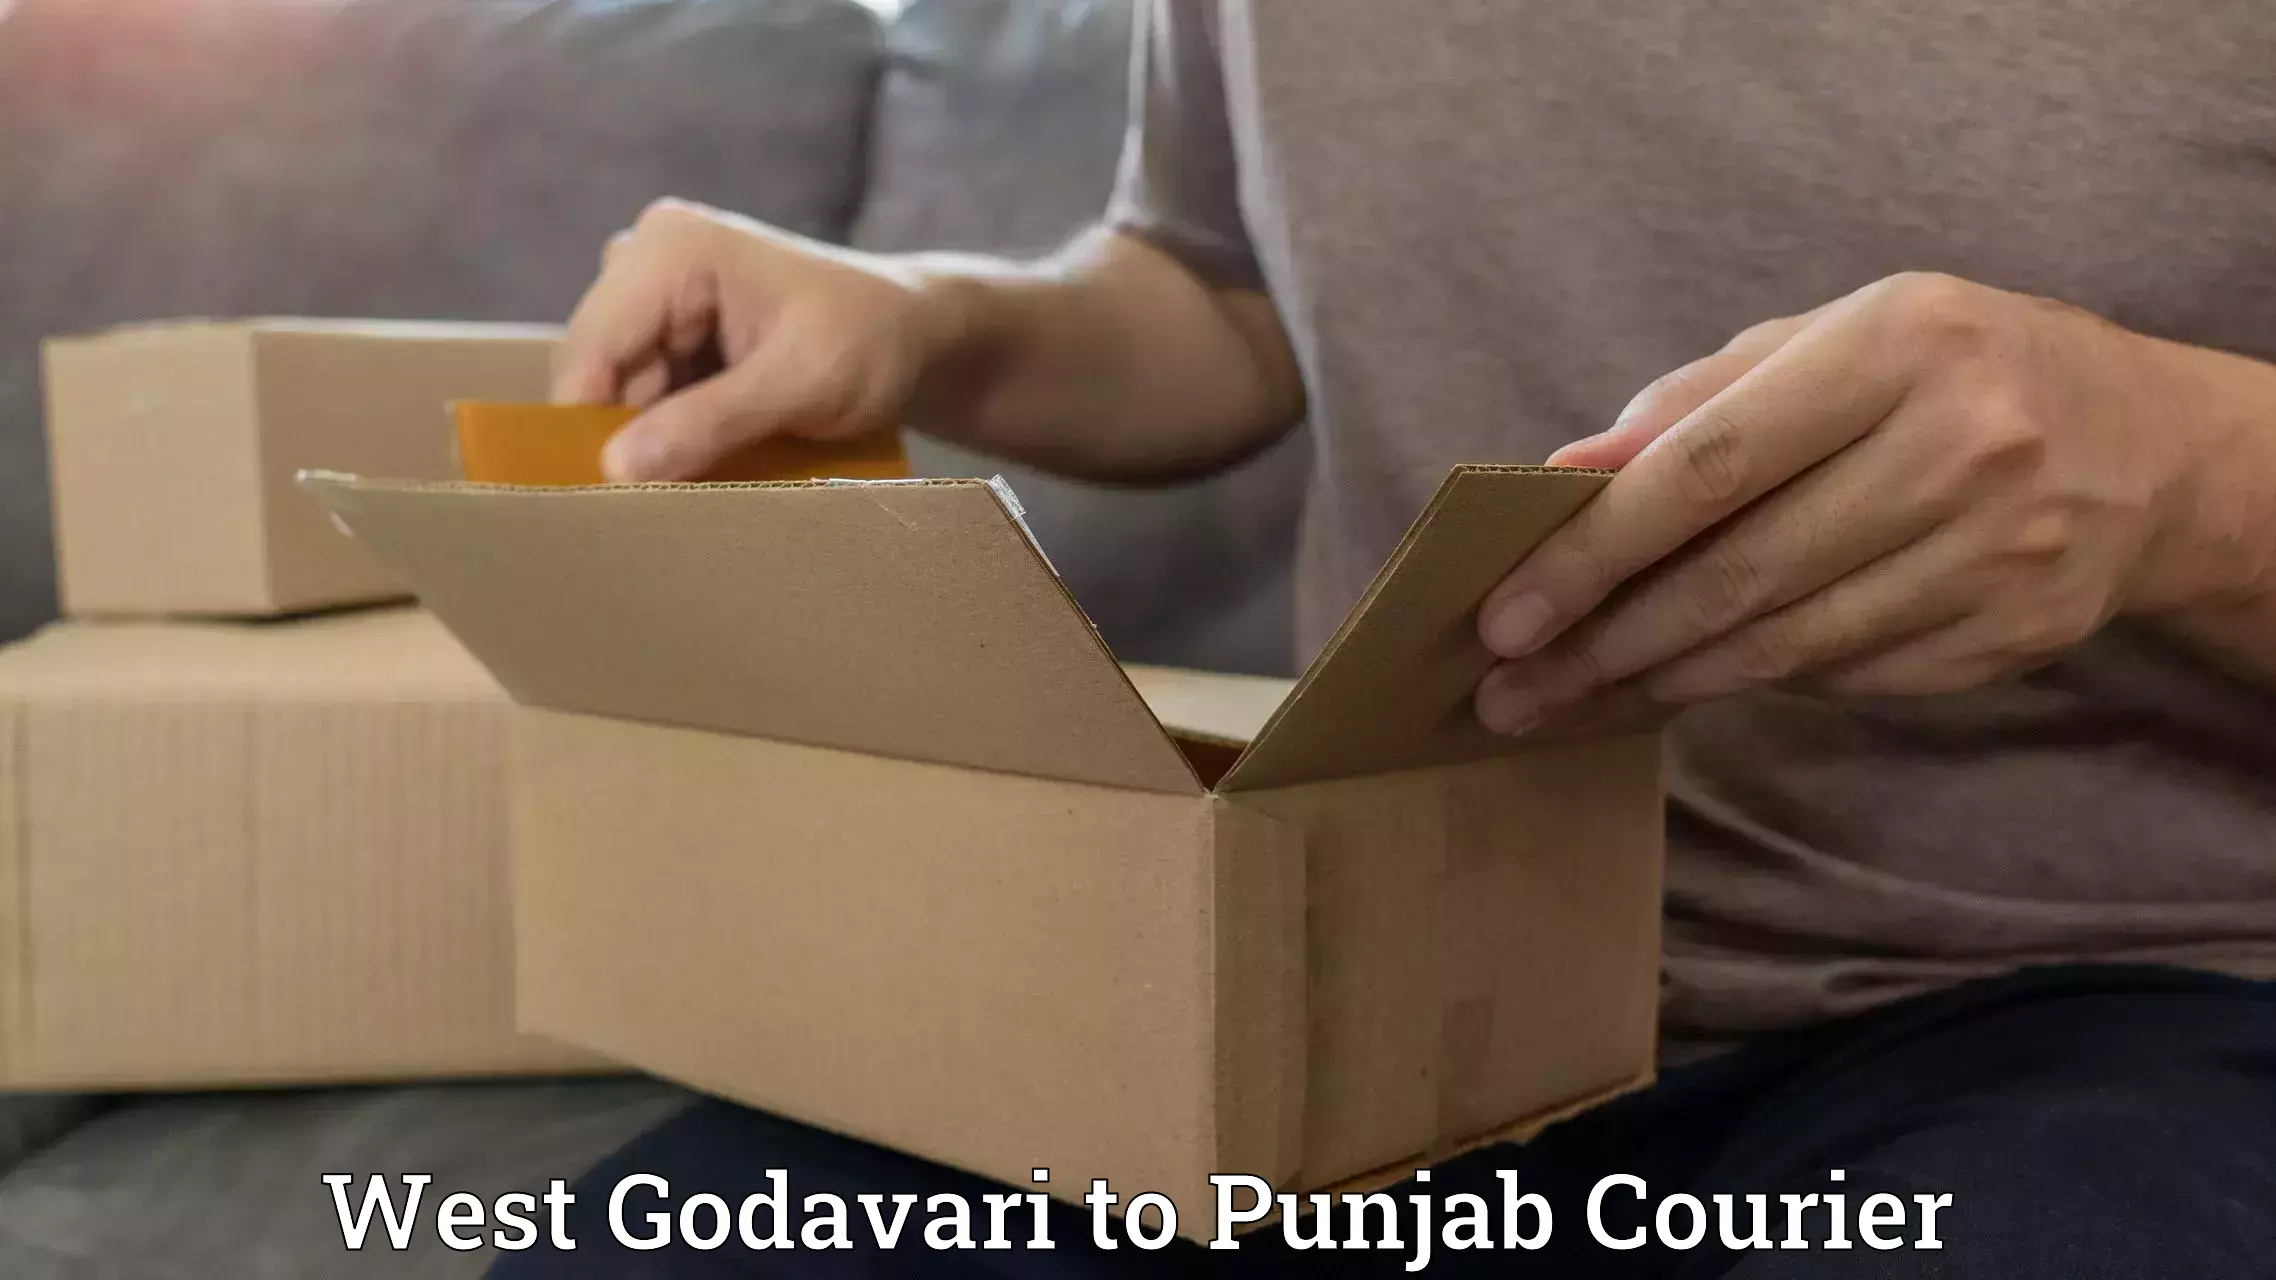 Courier rate comparison West Godavari to Mohali